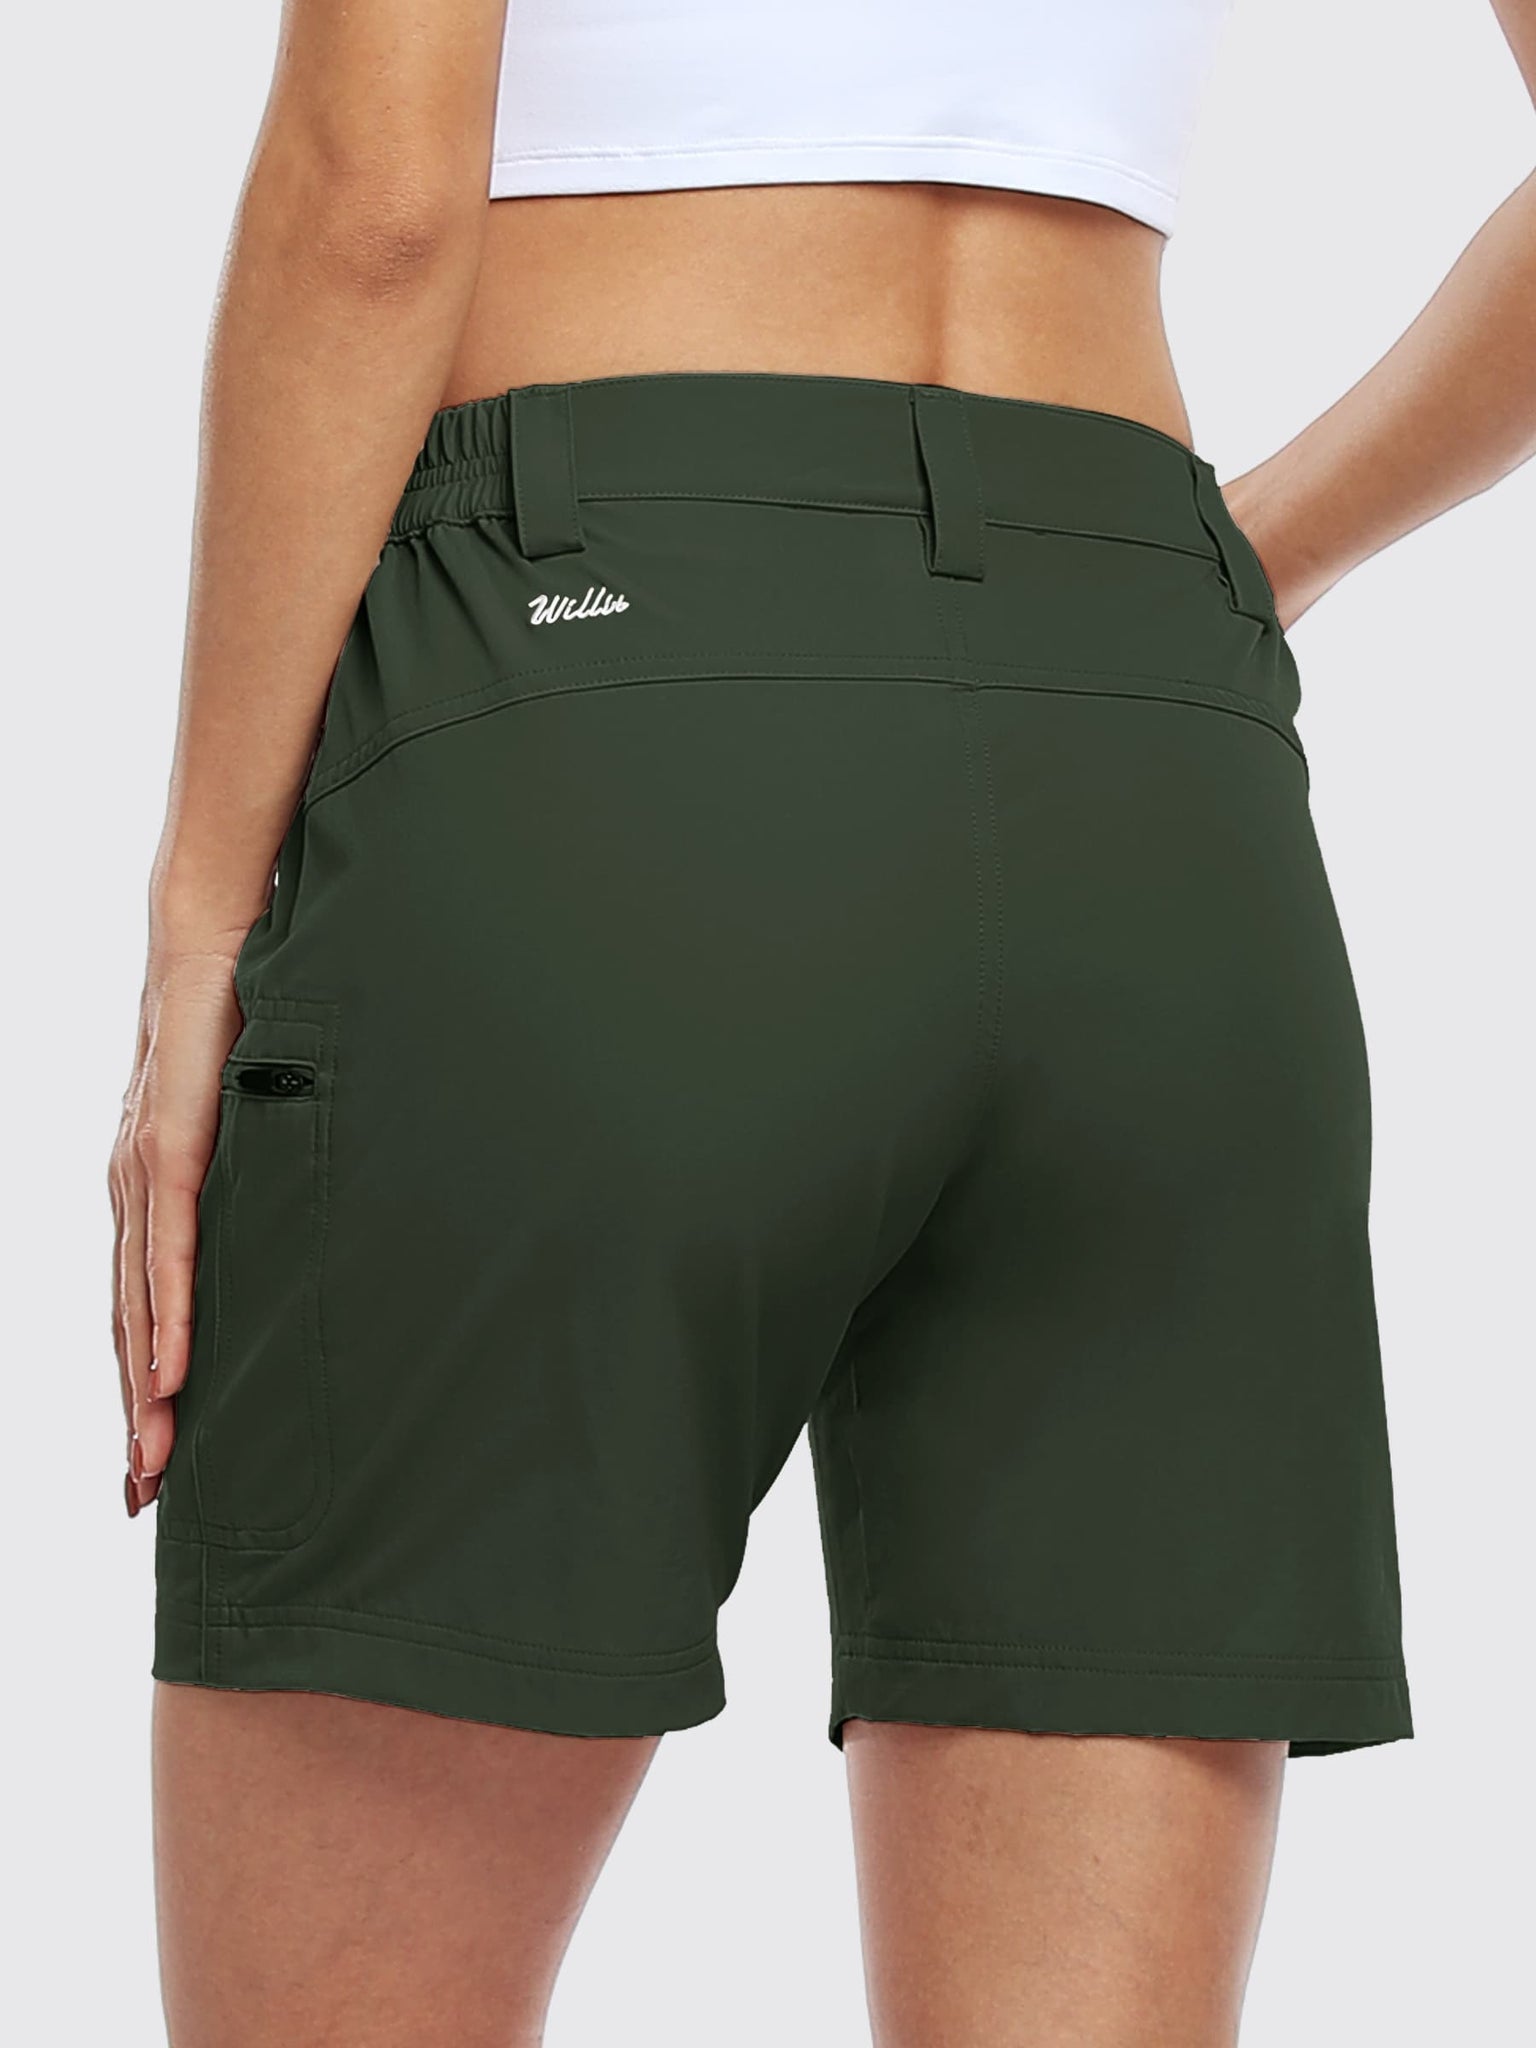 Willit Women's Outdoor Cargo Shorts 6 Inseam_ArmyGreen_model5